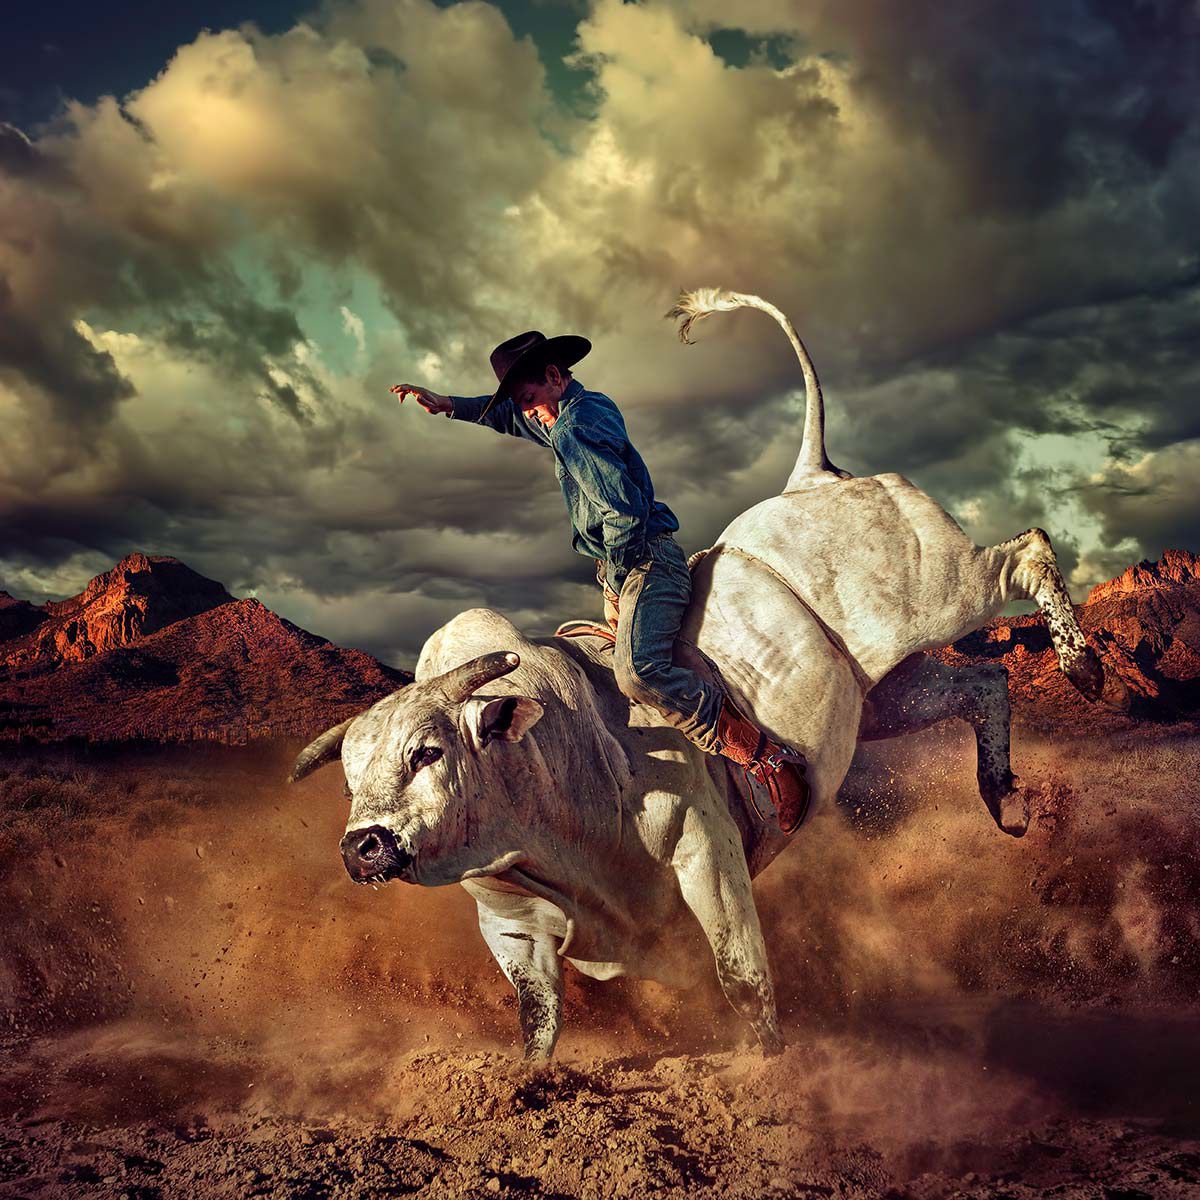 COWBOYS rodeo bull rider arizona desert cowboy hat concept conceptual portrait boots and shoes